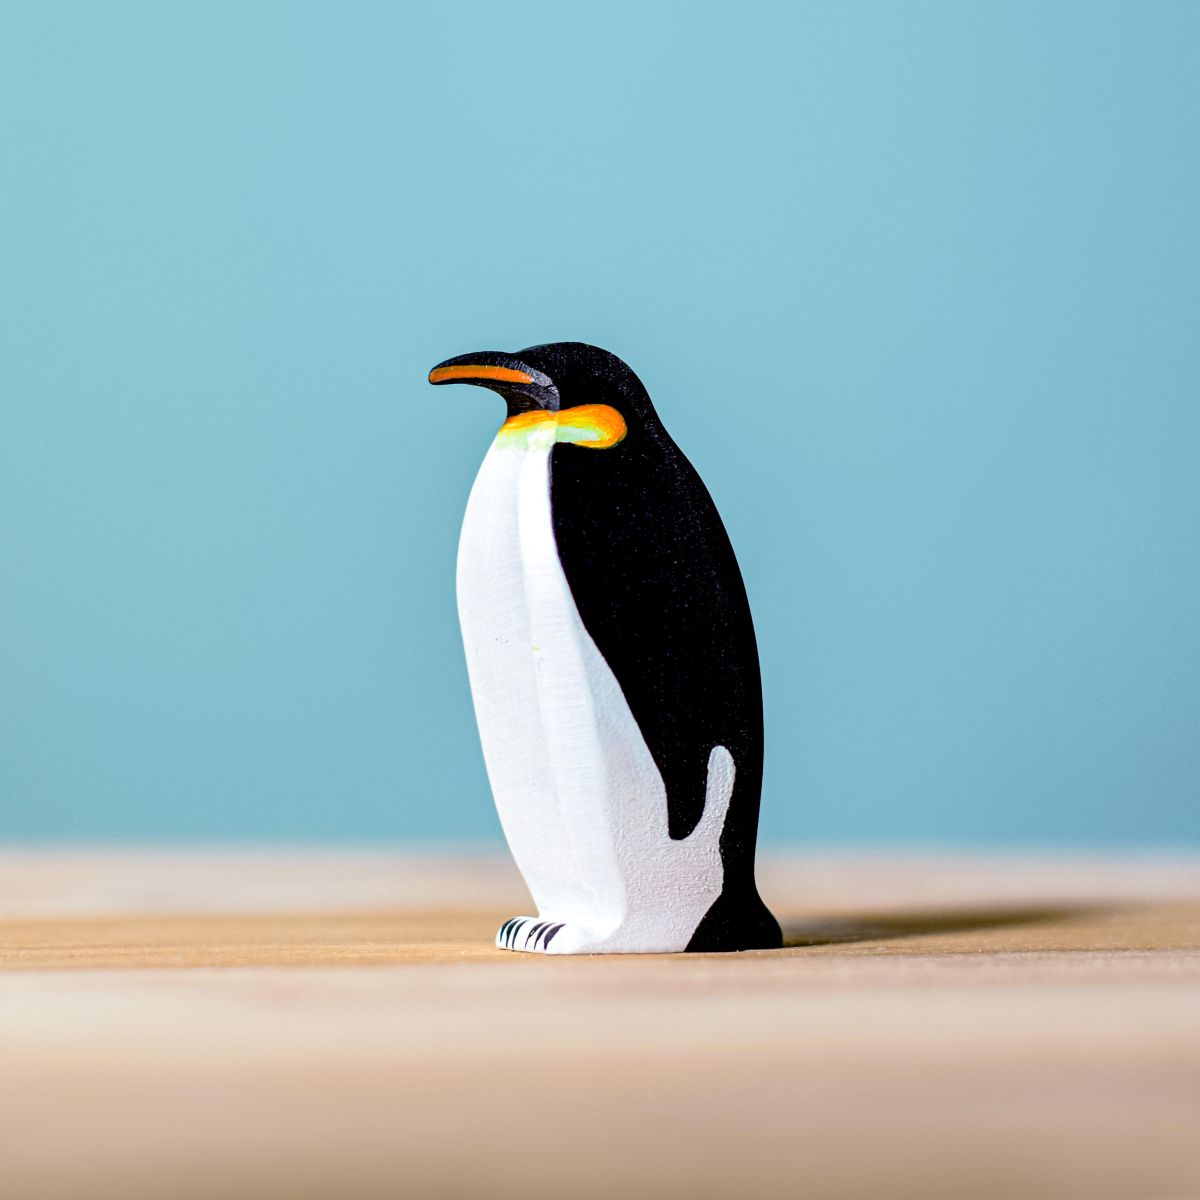 Bumbu Toys Emperor Penguin (Male and Female)